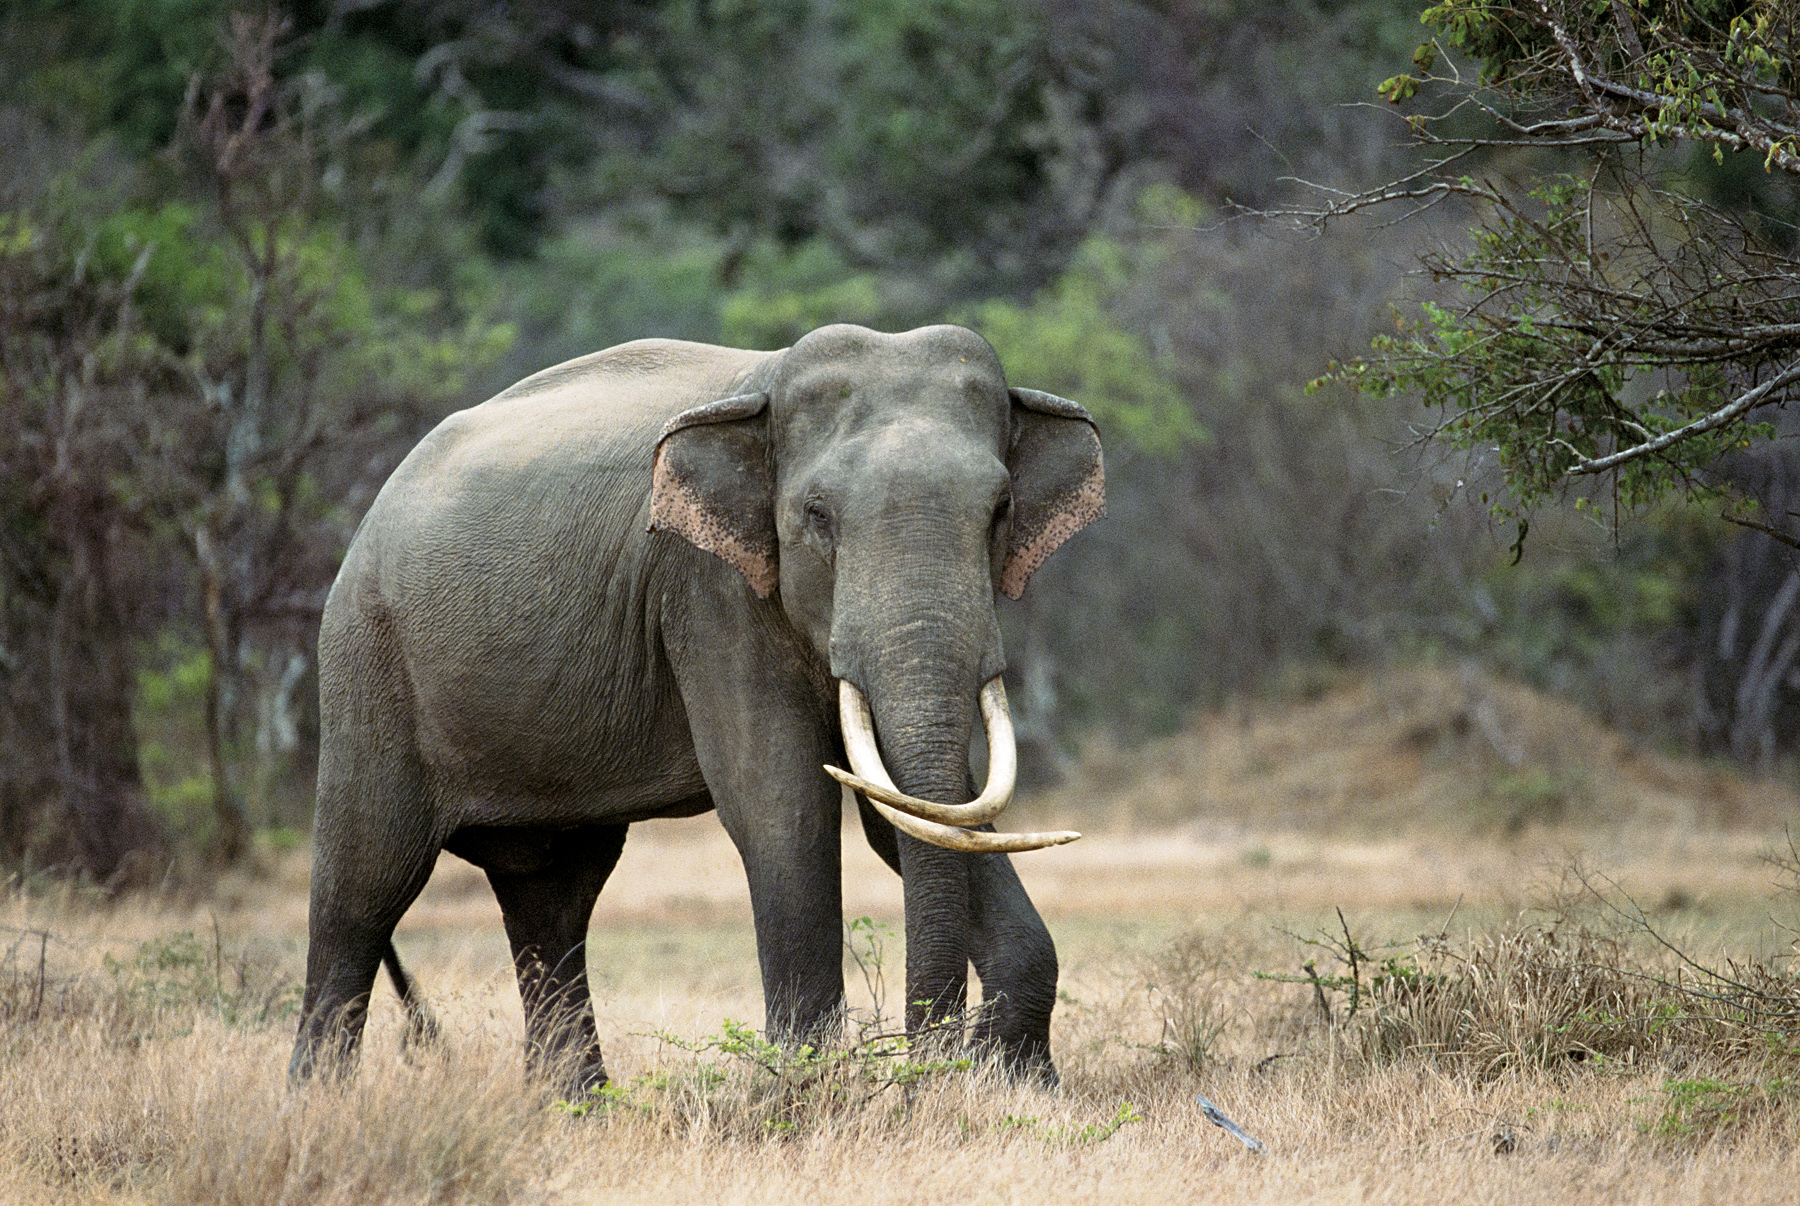 Sri Lanka war-zone becomes wildlife sanctuary